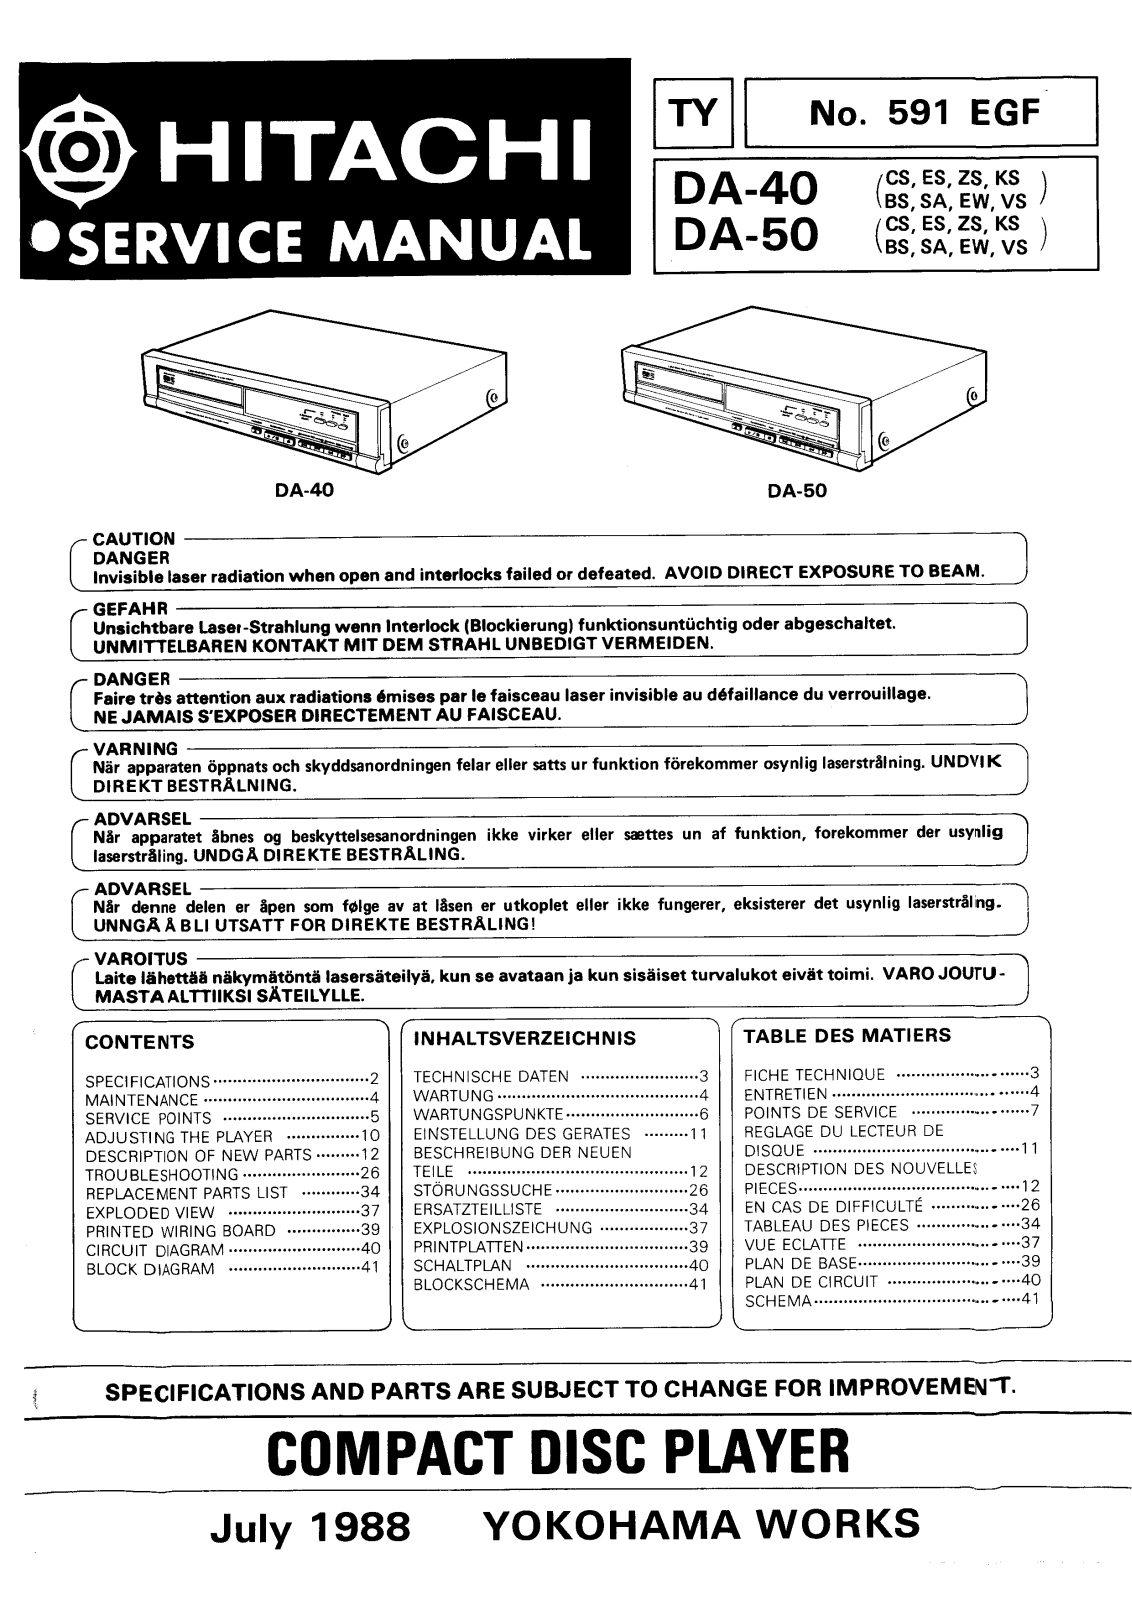 Hitachi DA-40, DA-50 Service manual